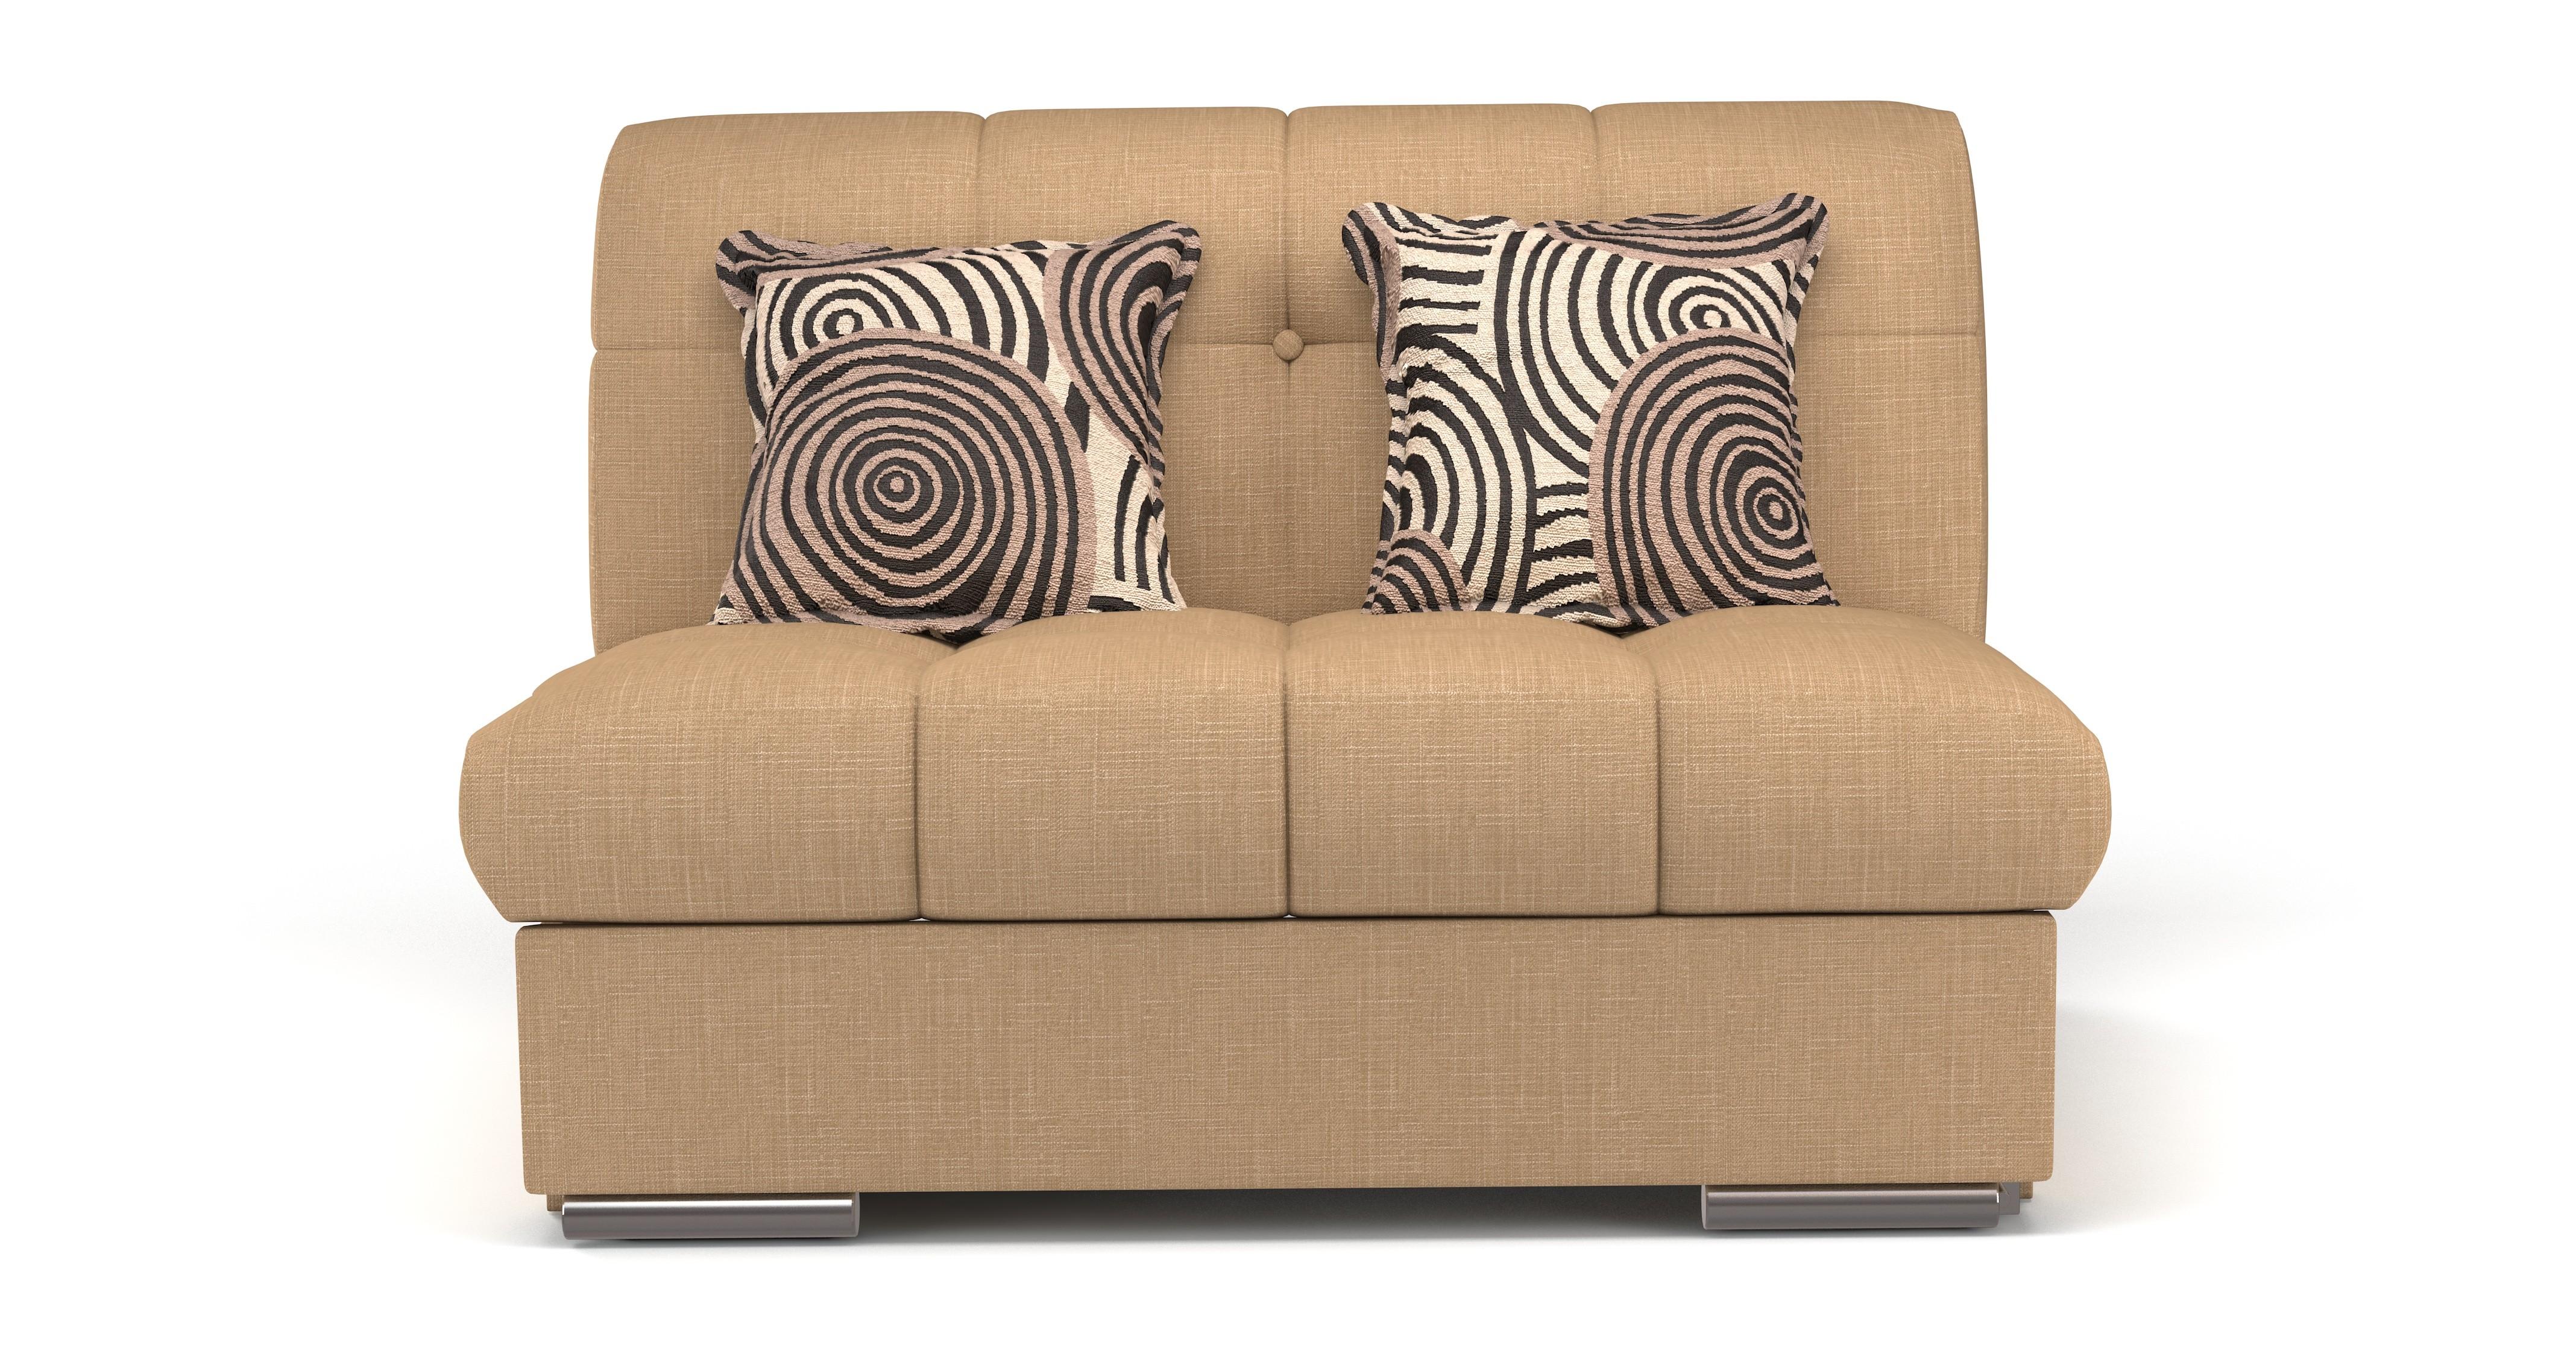 DFS Fabric Sofa Bed - New Explore Medium Size Stone / Beige Sofa Bed ...